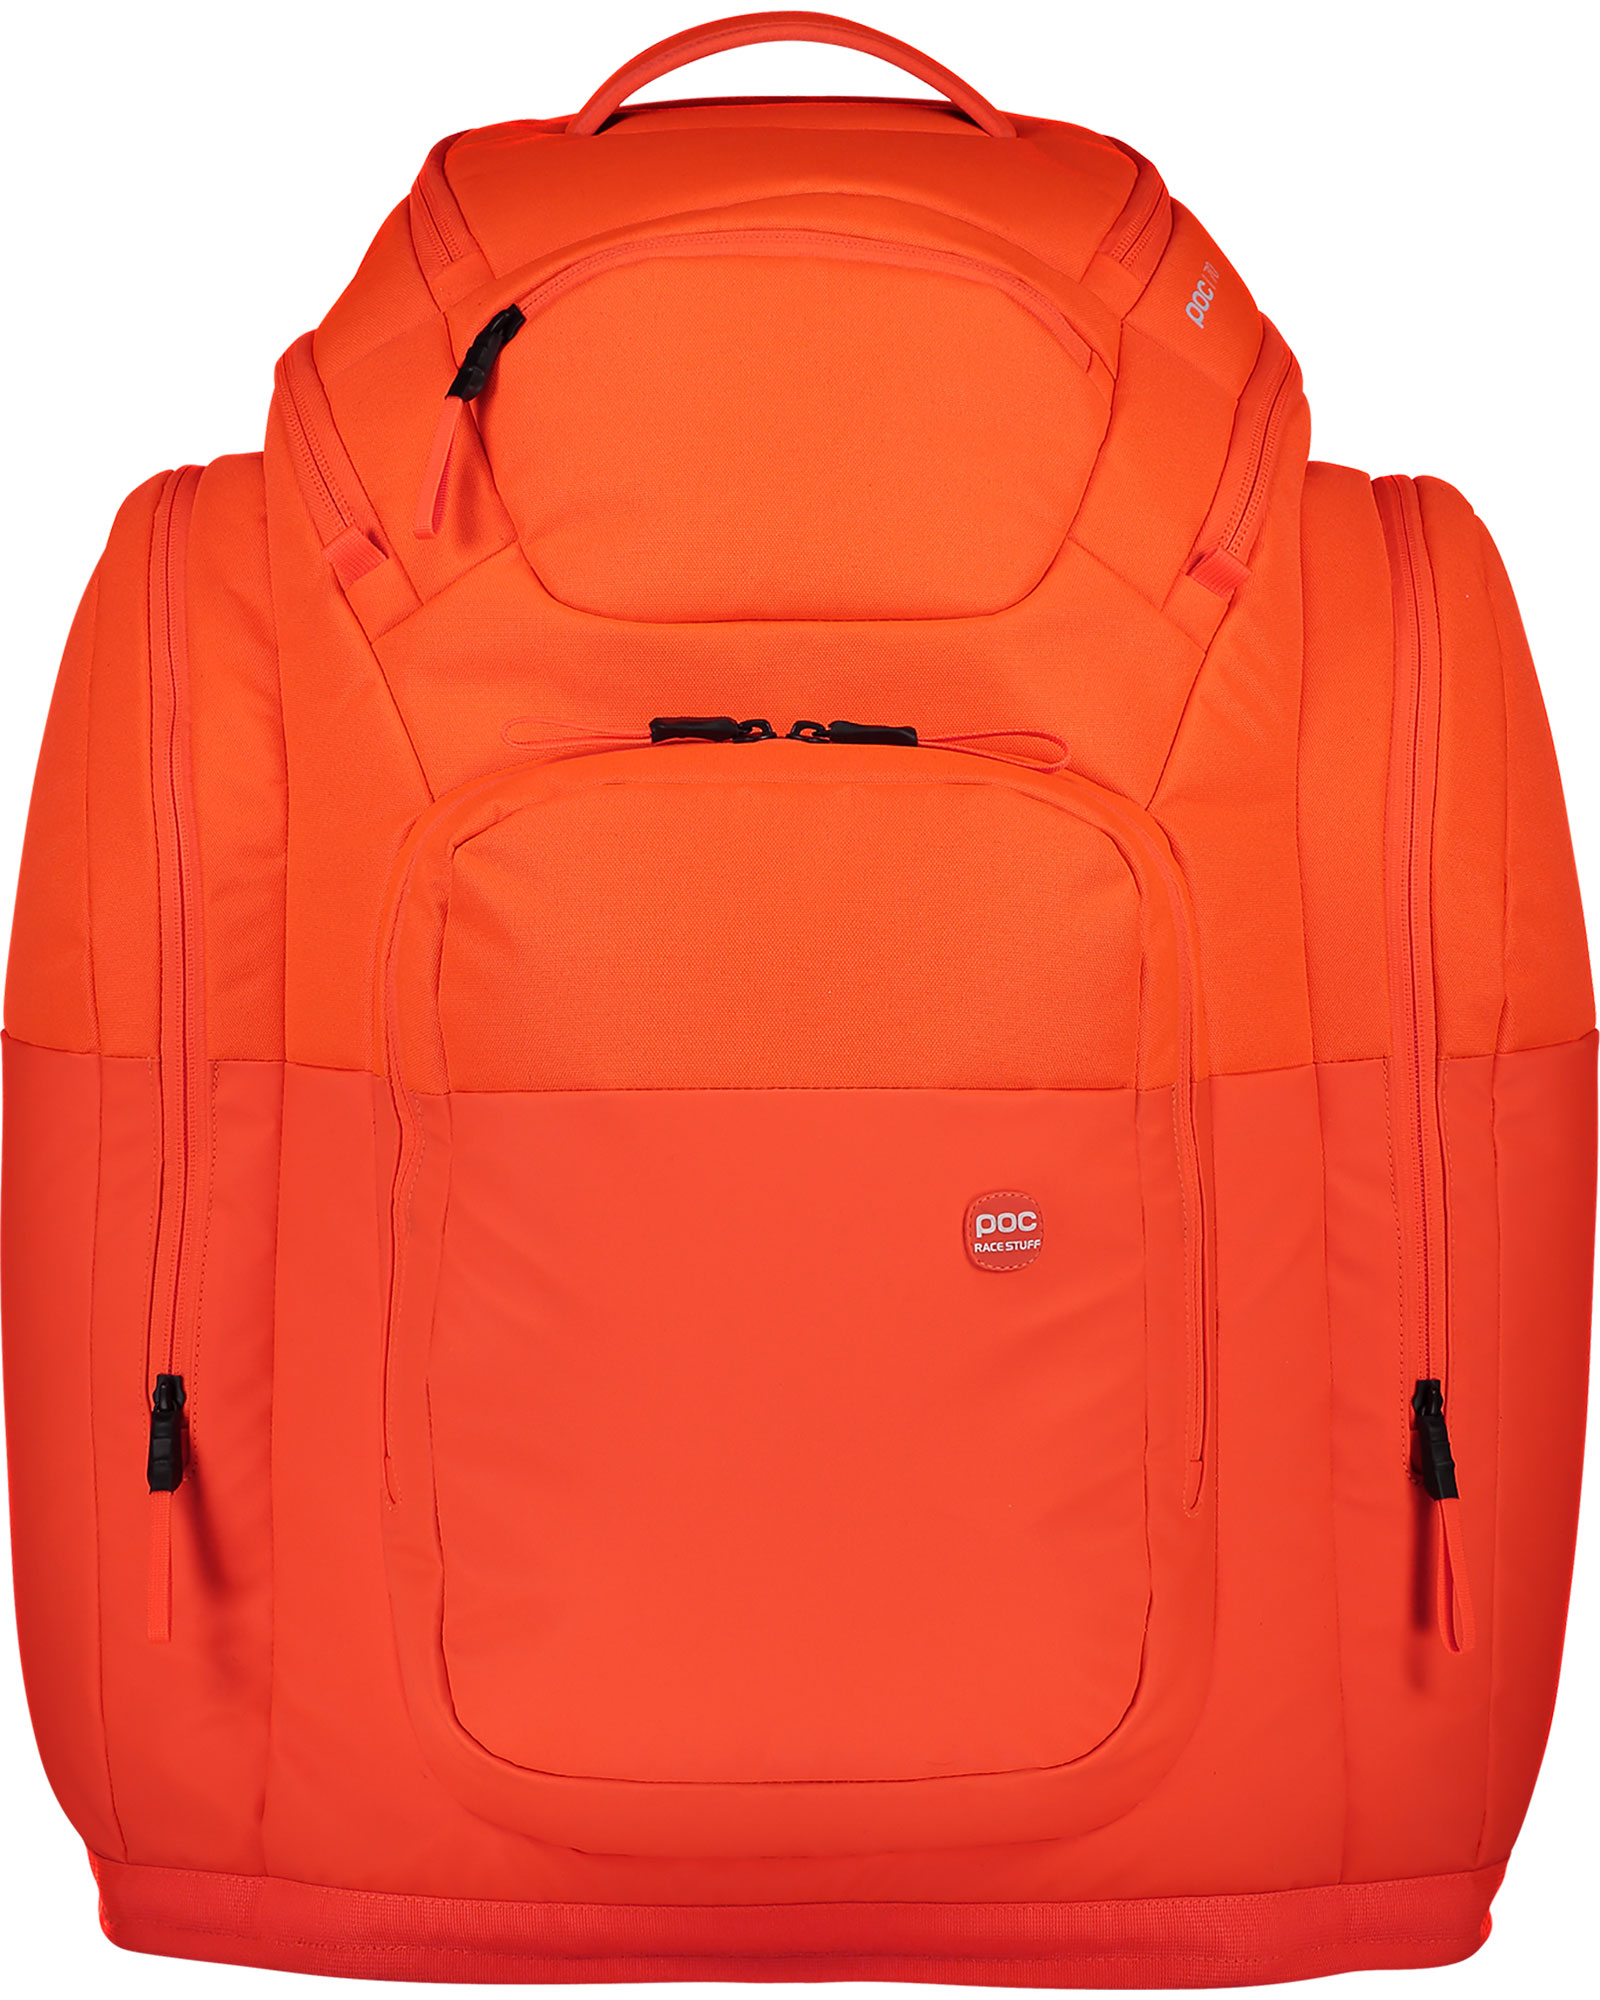 POC Race Backpack 70L - Fluorescent Orange